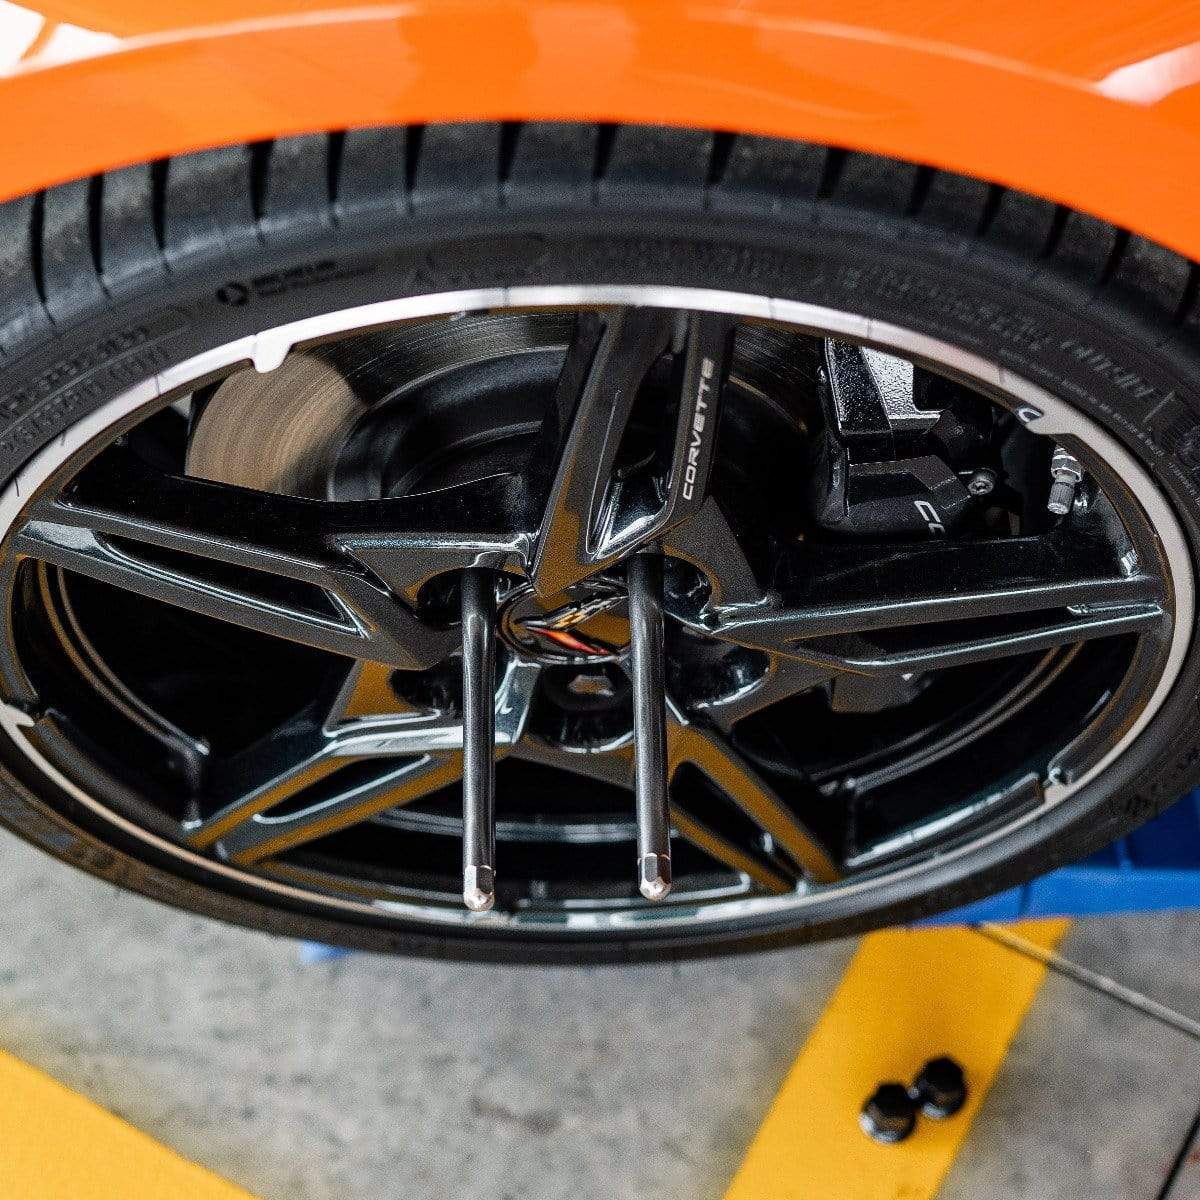 ACS Composite C8 Wheel Stud Extenders (SKU nan) for safe wheel removal on Corvette. Stainless steel, 200mm long, set of 2.